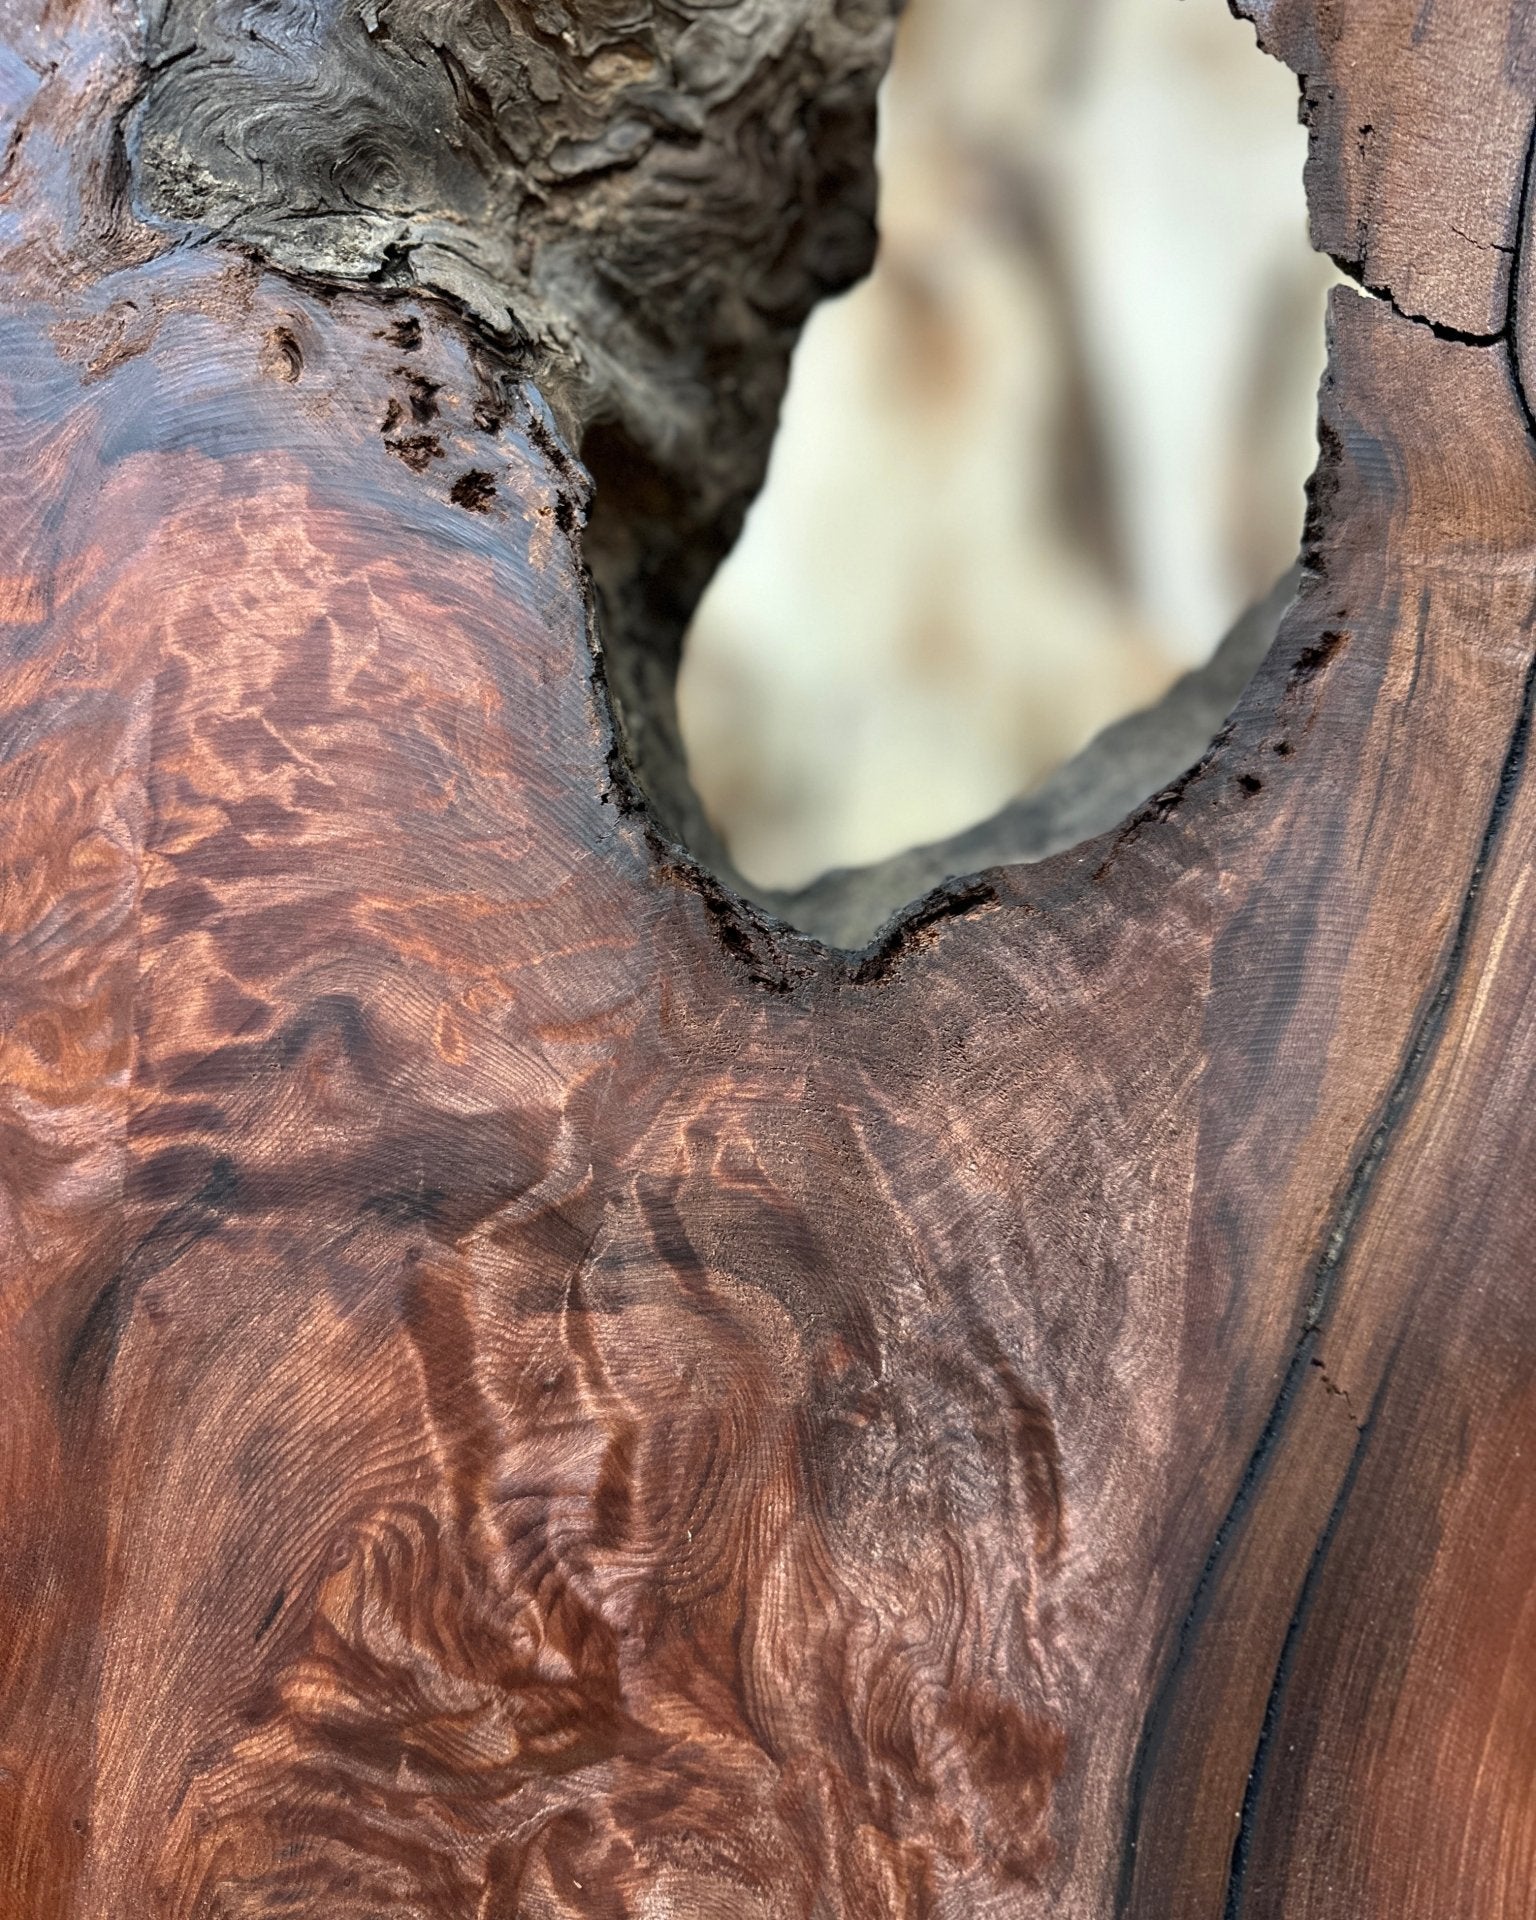 LiveEdge Redwood Burl | Redwood Burl | Hamilton Lee Supply